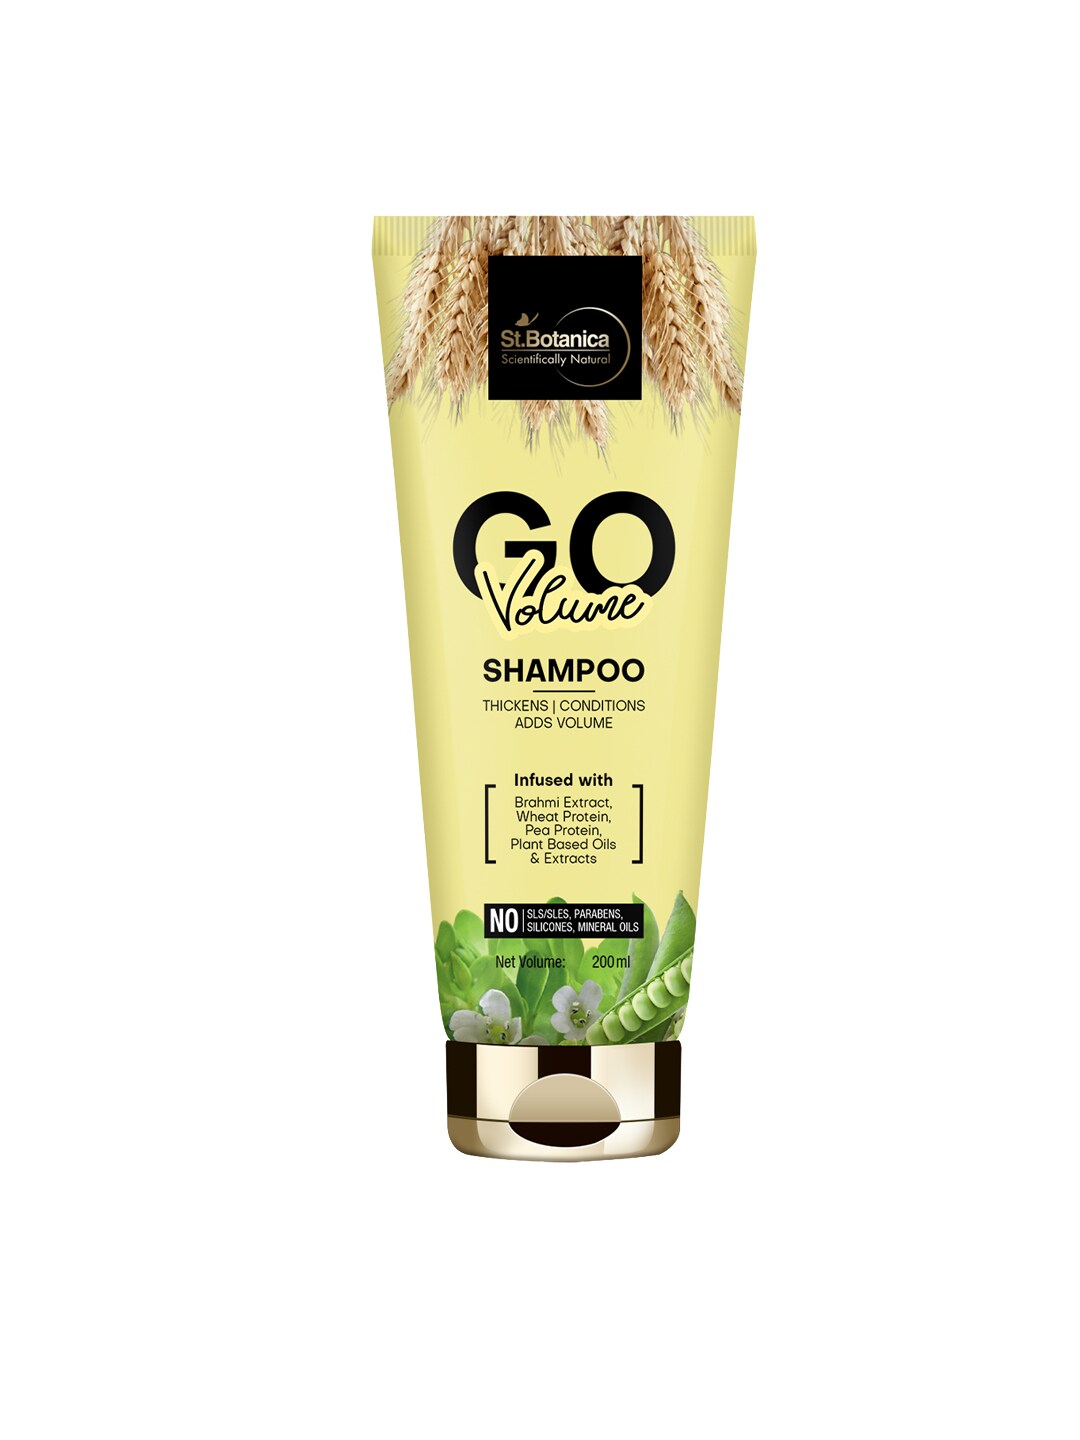 St.Botanica Go Volume Shampoo - 200 ml Price in India